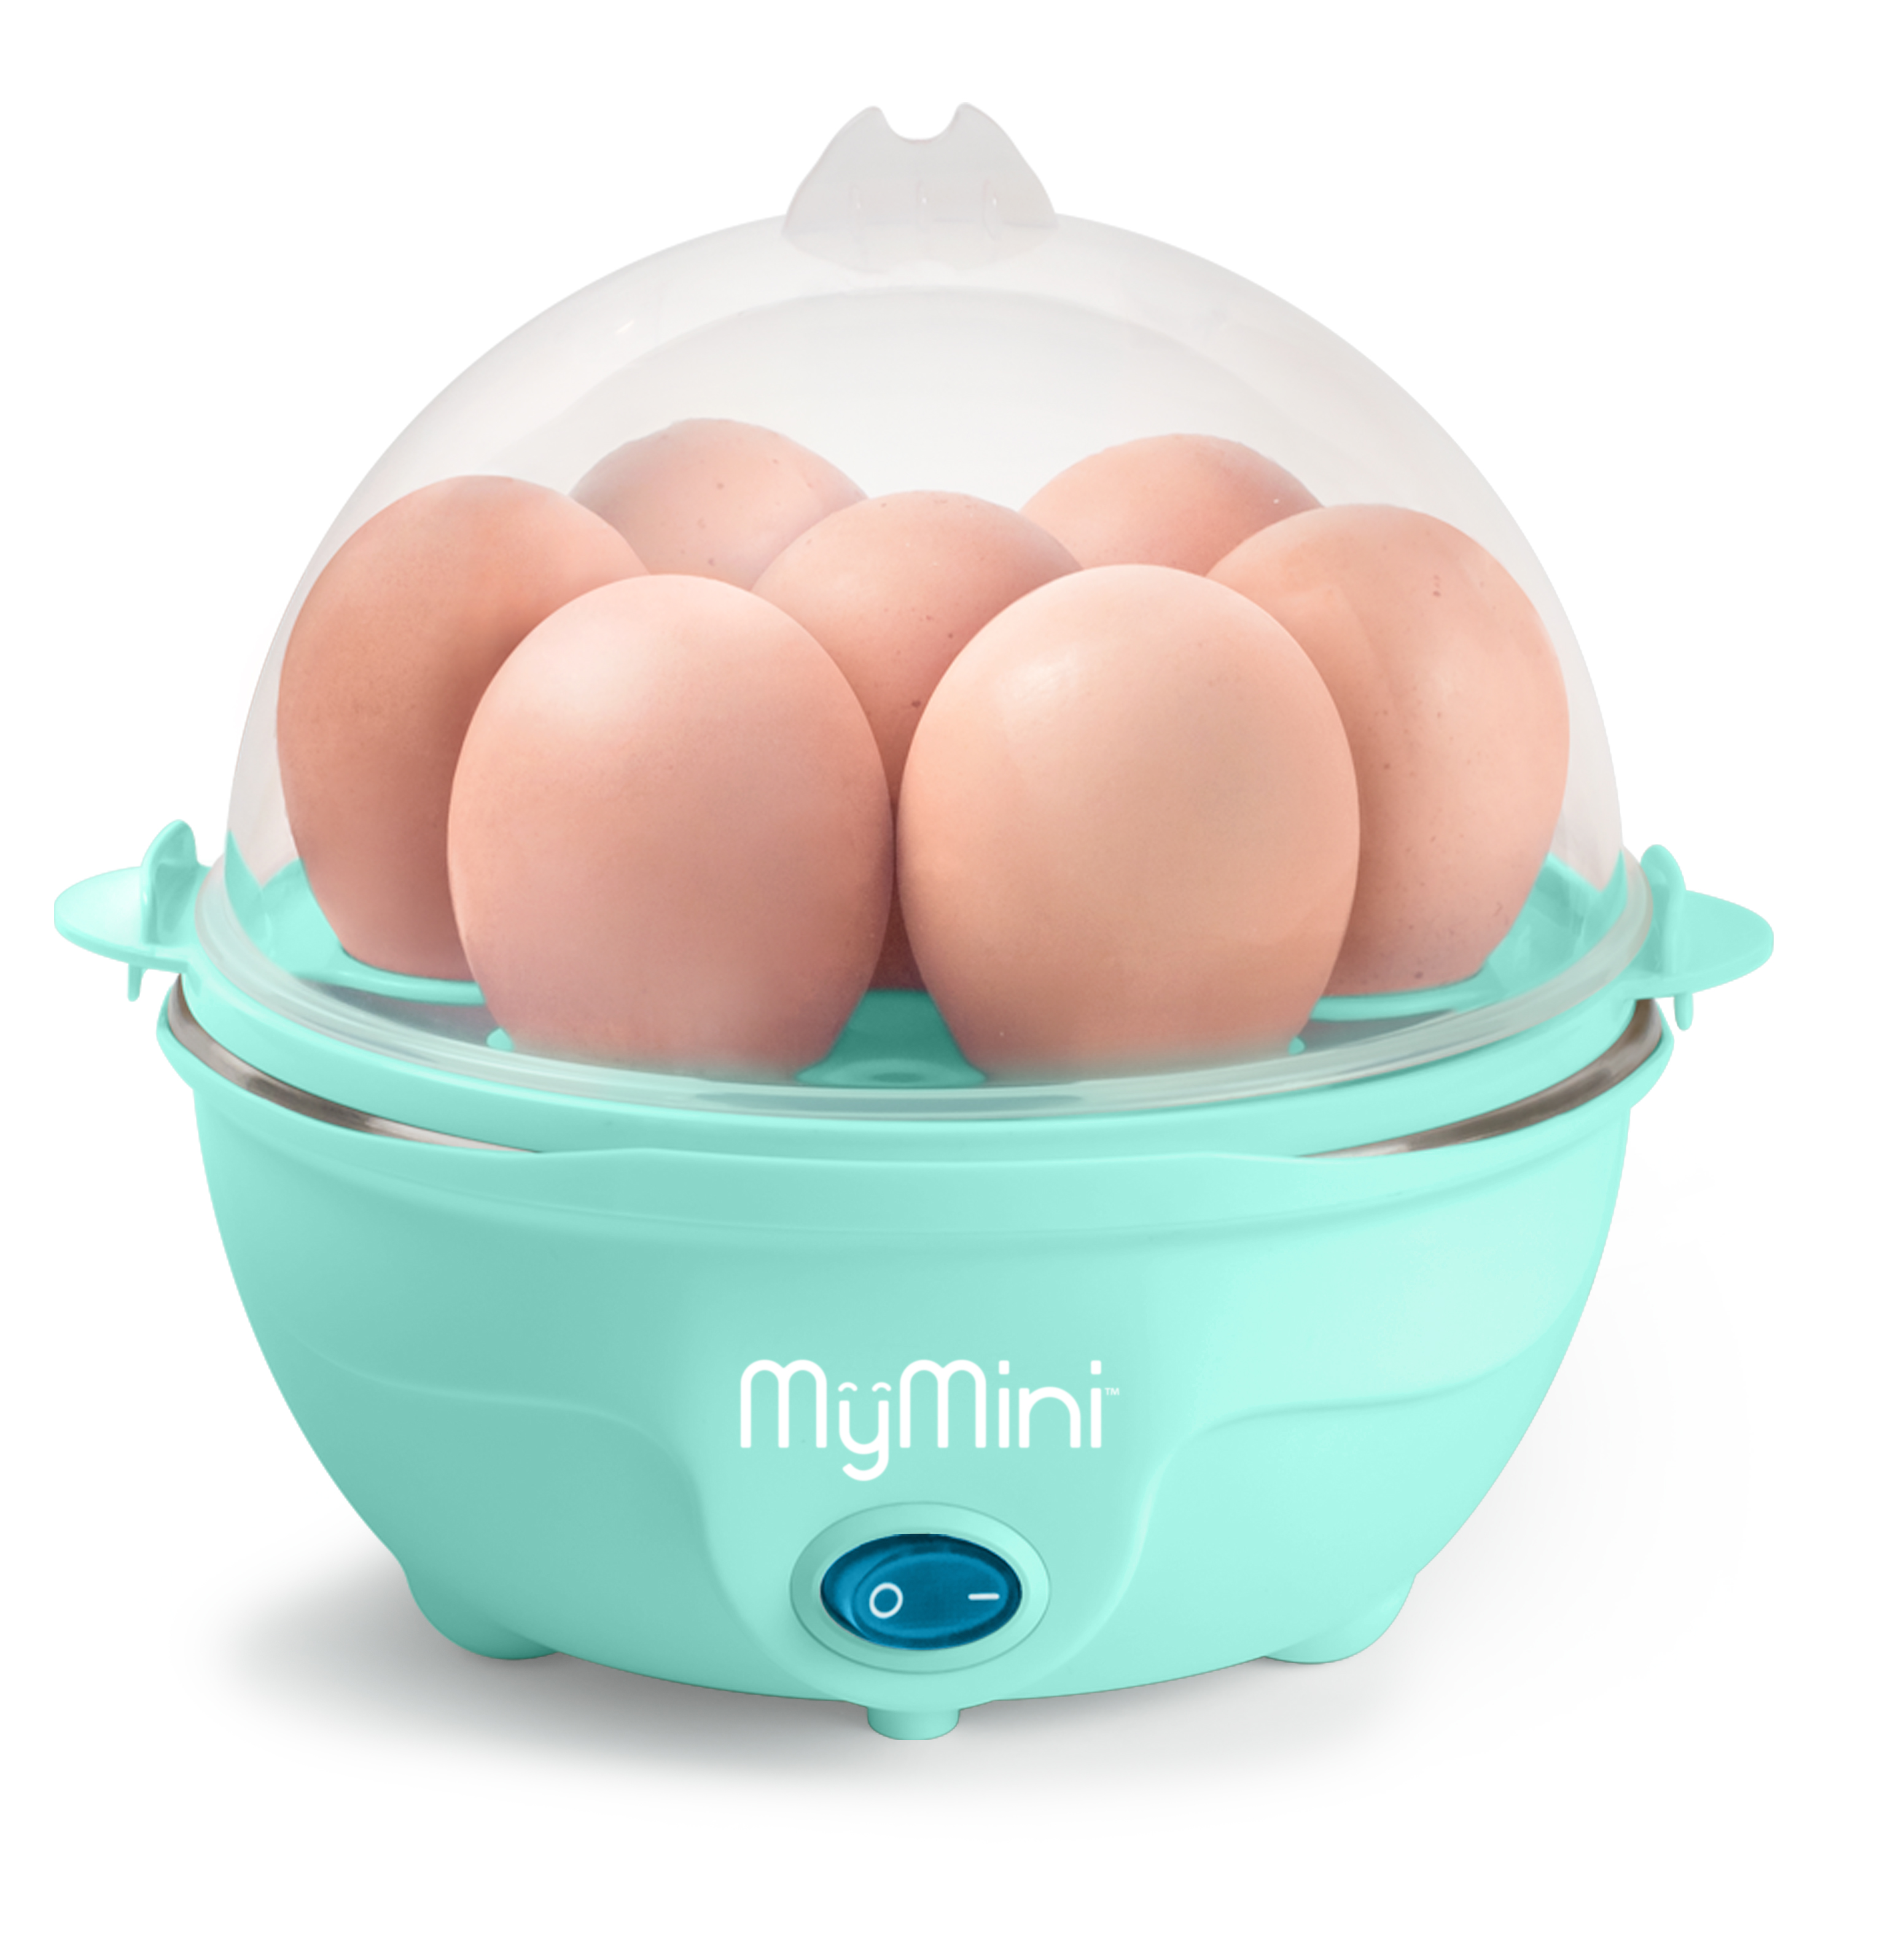 MyMini Premium 7-Egg Cooker, Teal - image 1 of 12